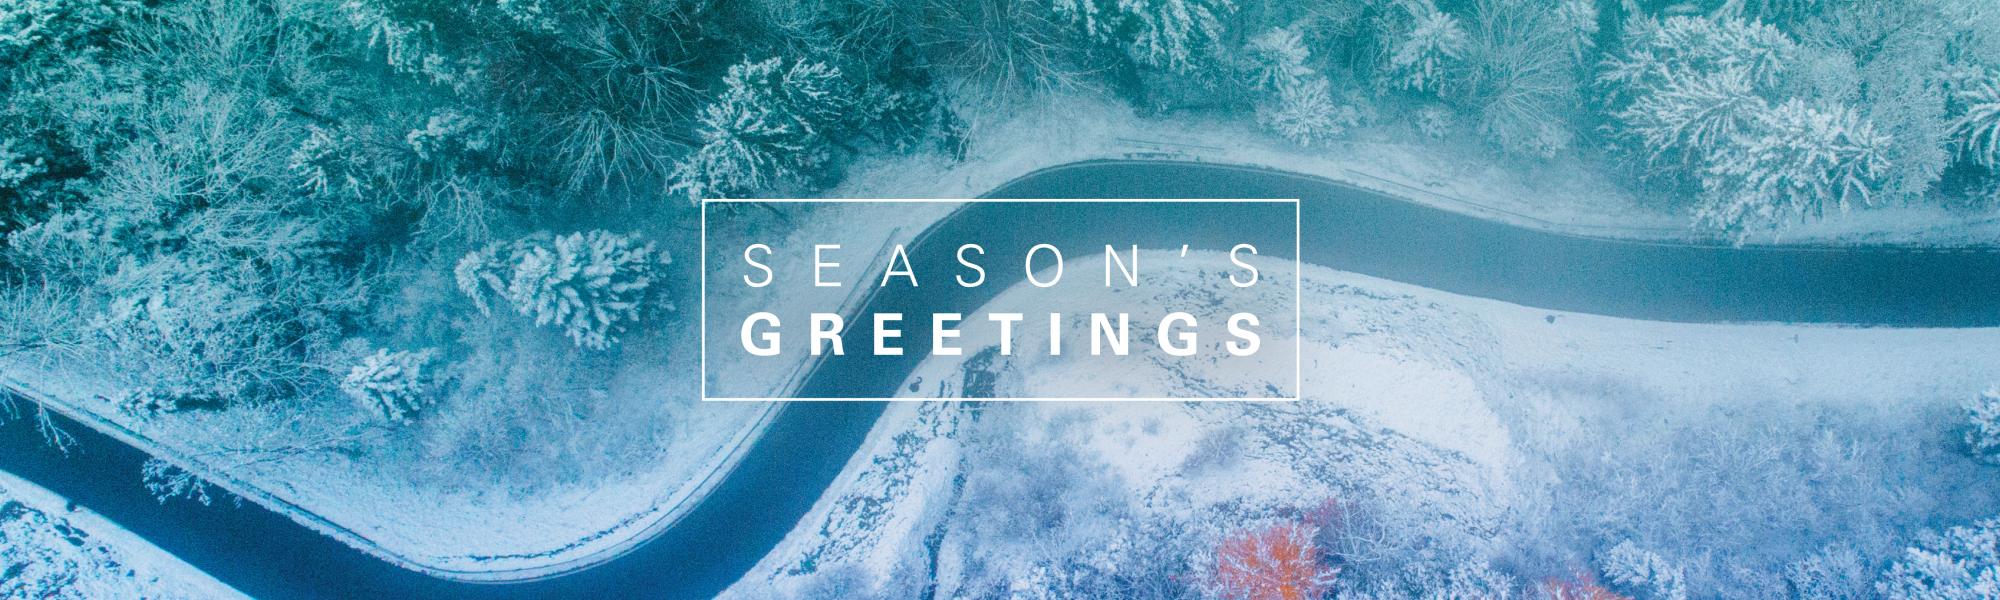 IRU season's greetings